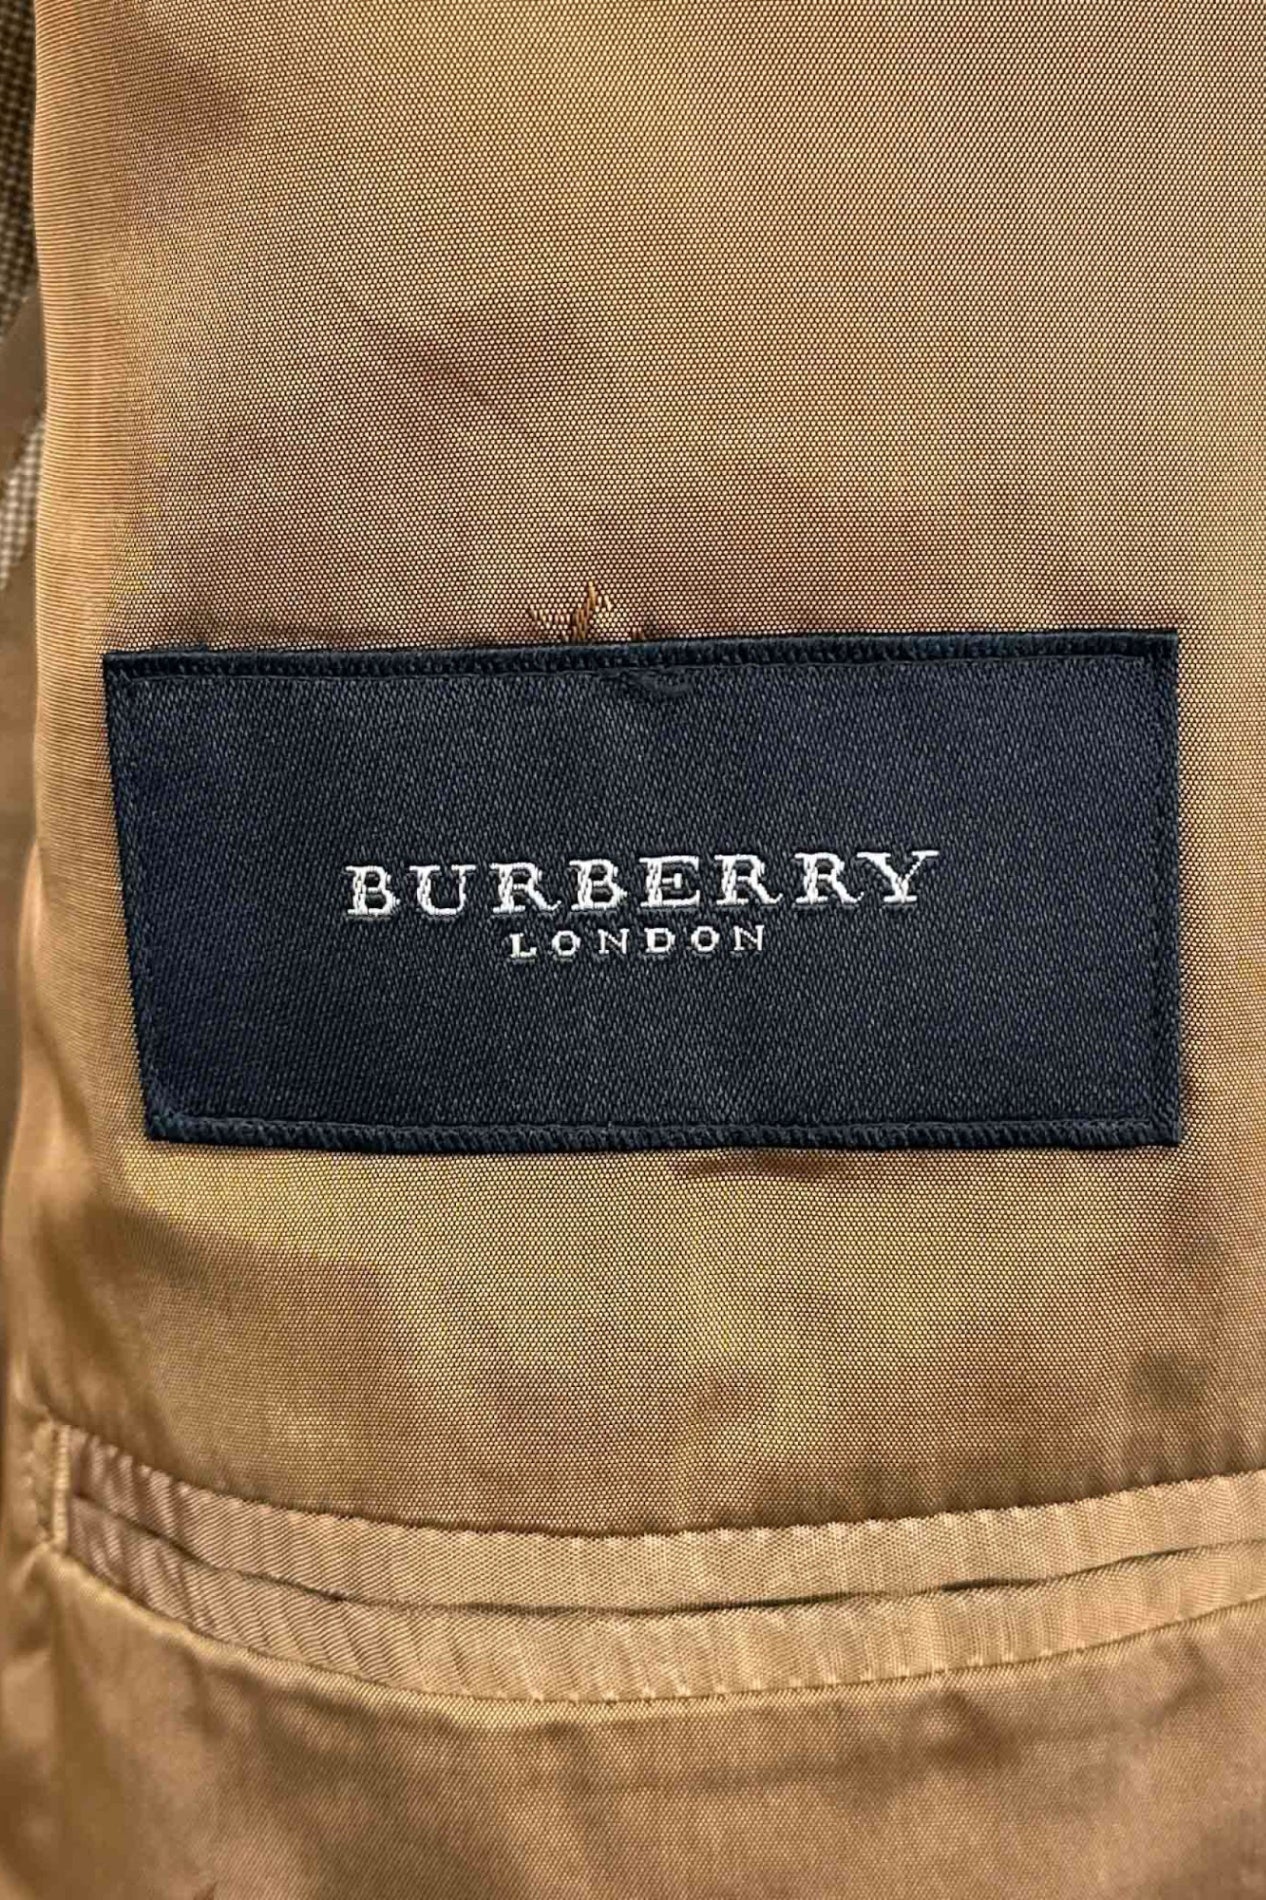 BURBERRY LONDON brown jacket